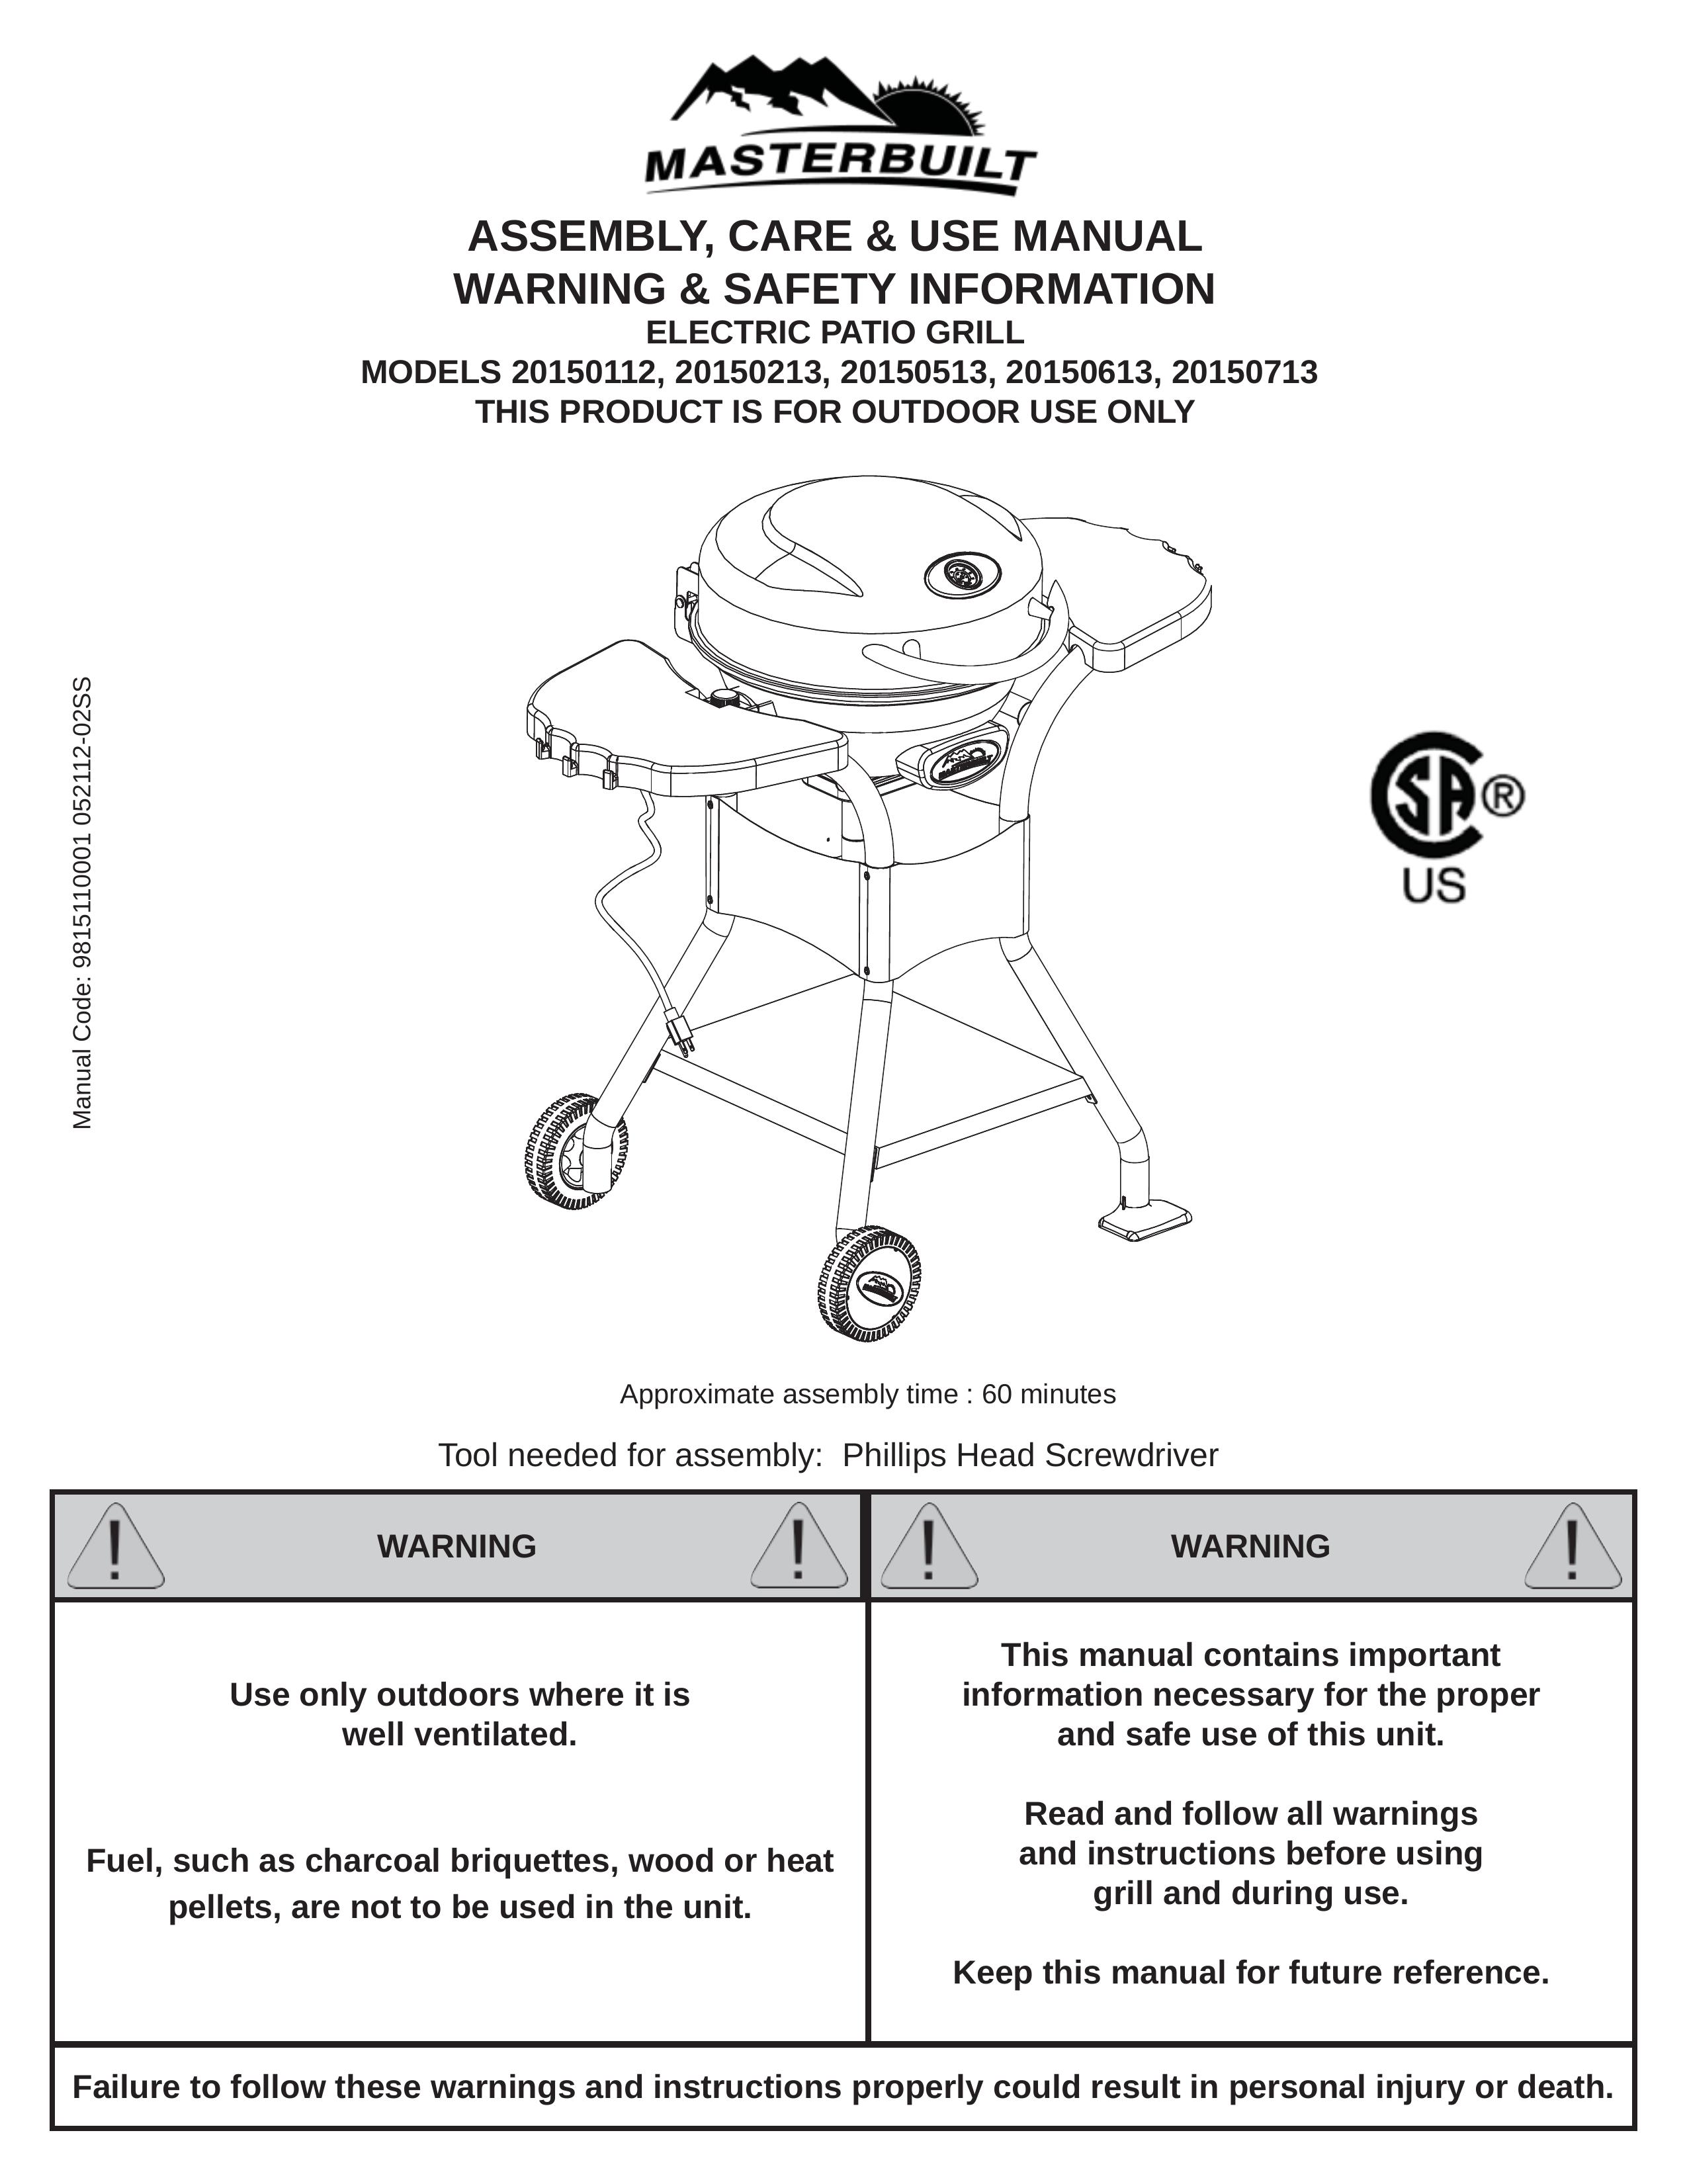 Master Bilt 20150213 Electric Grill User Manual